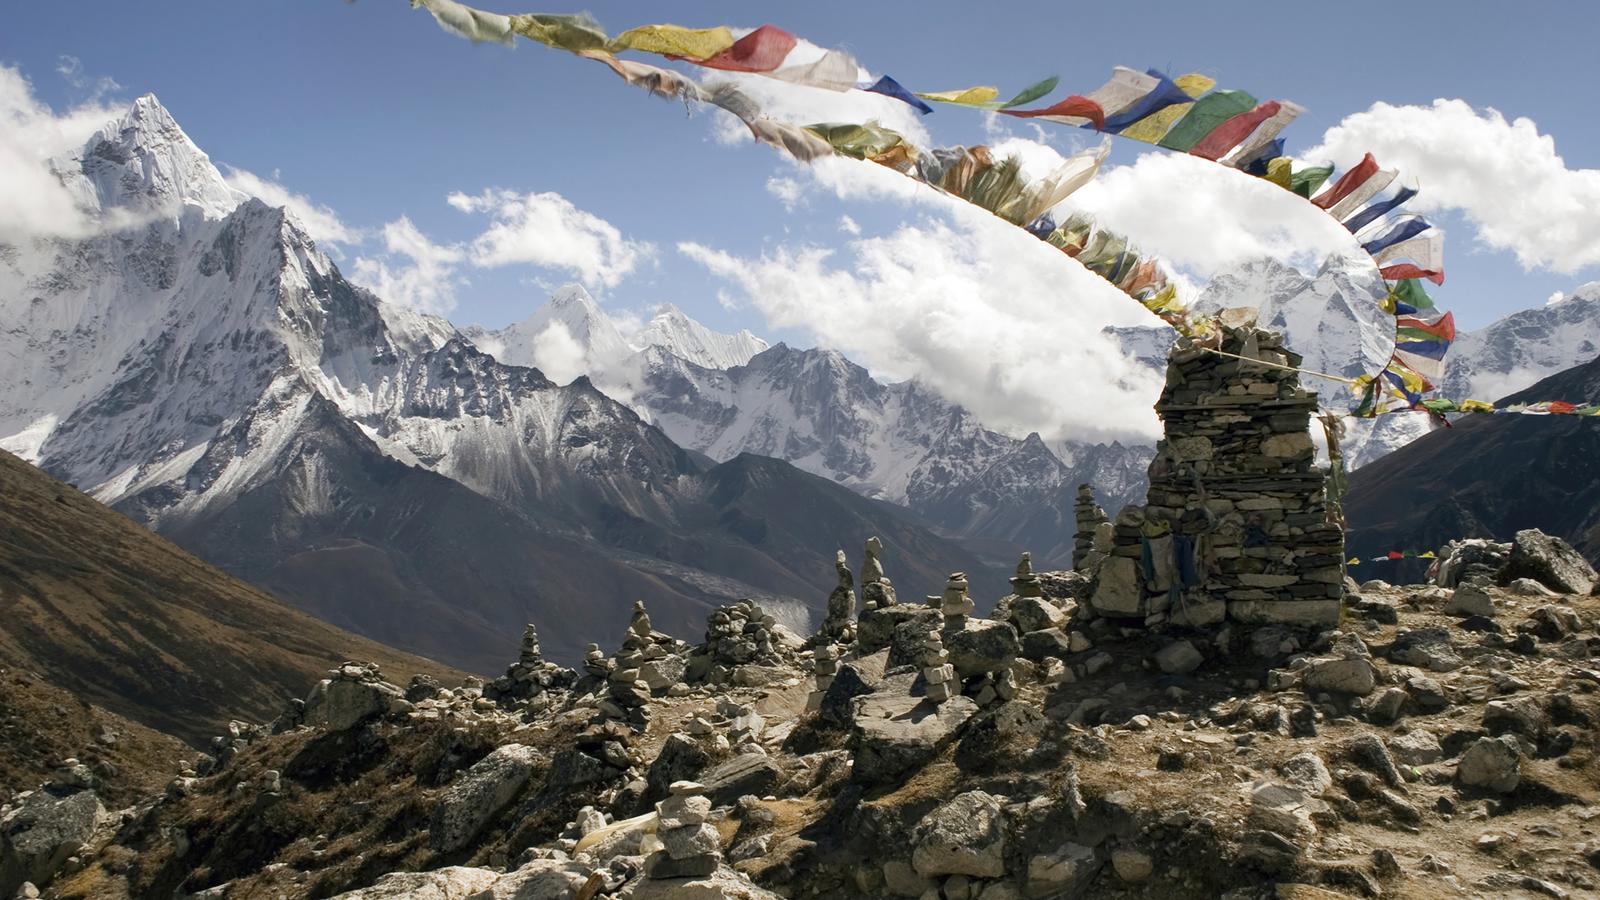 Langtang Trekking in Nepal